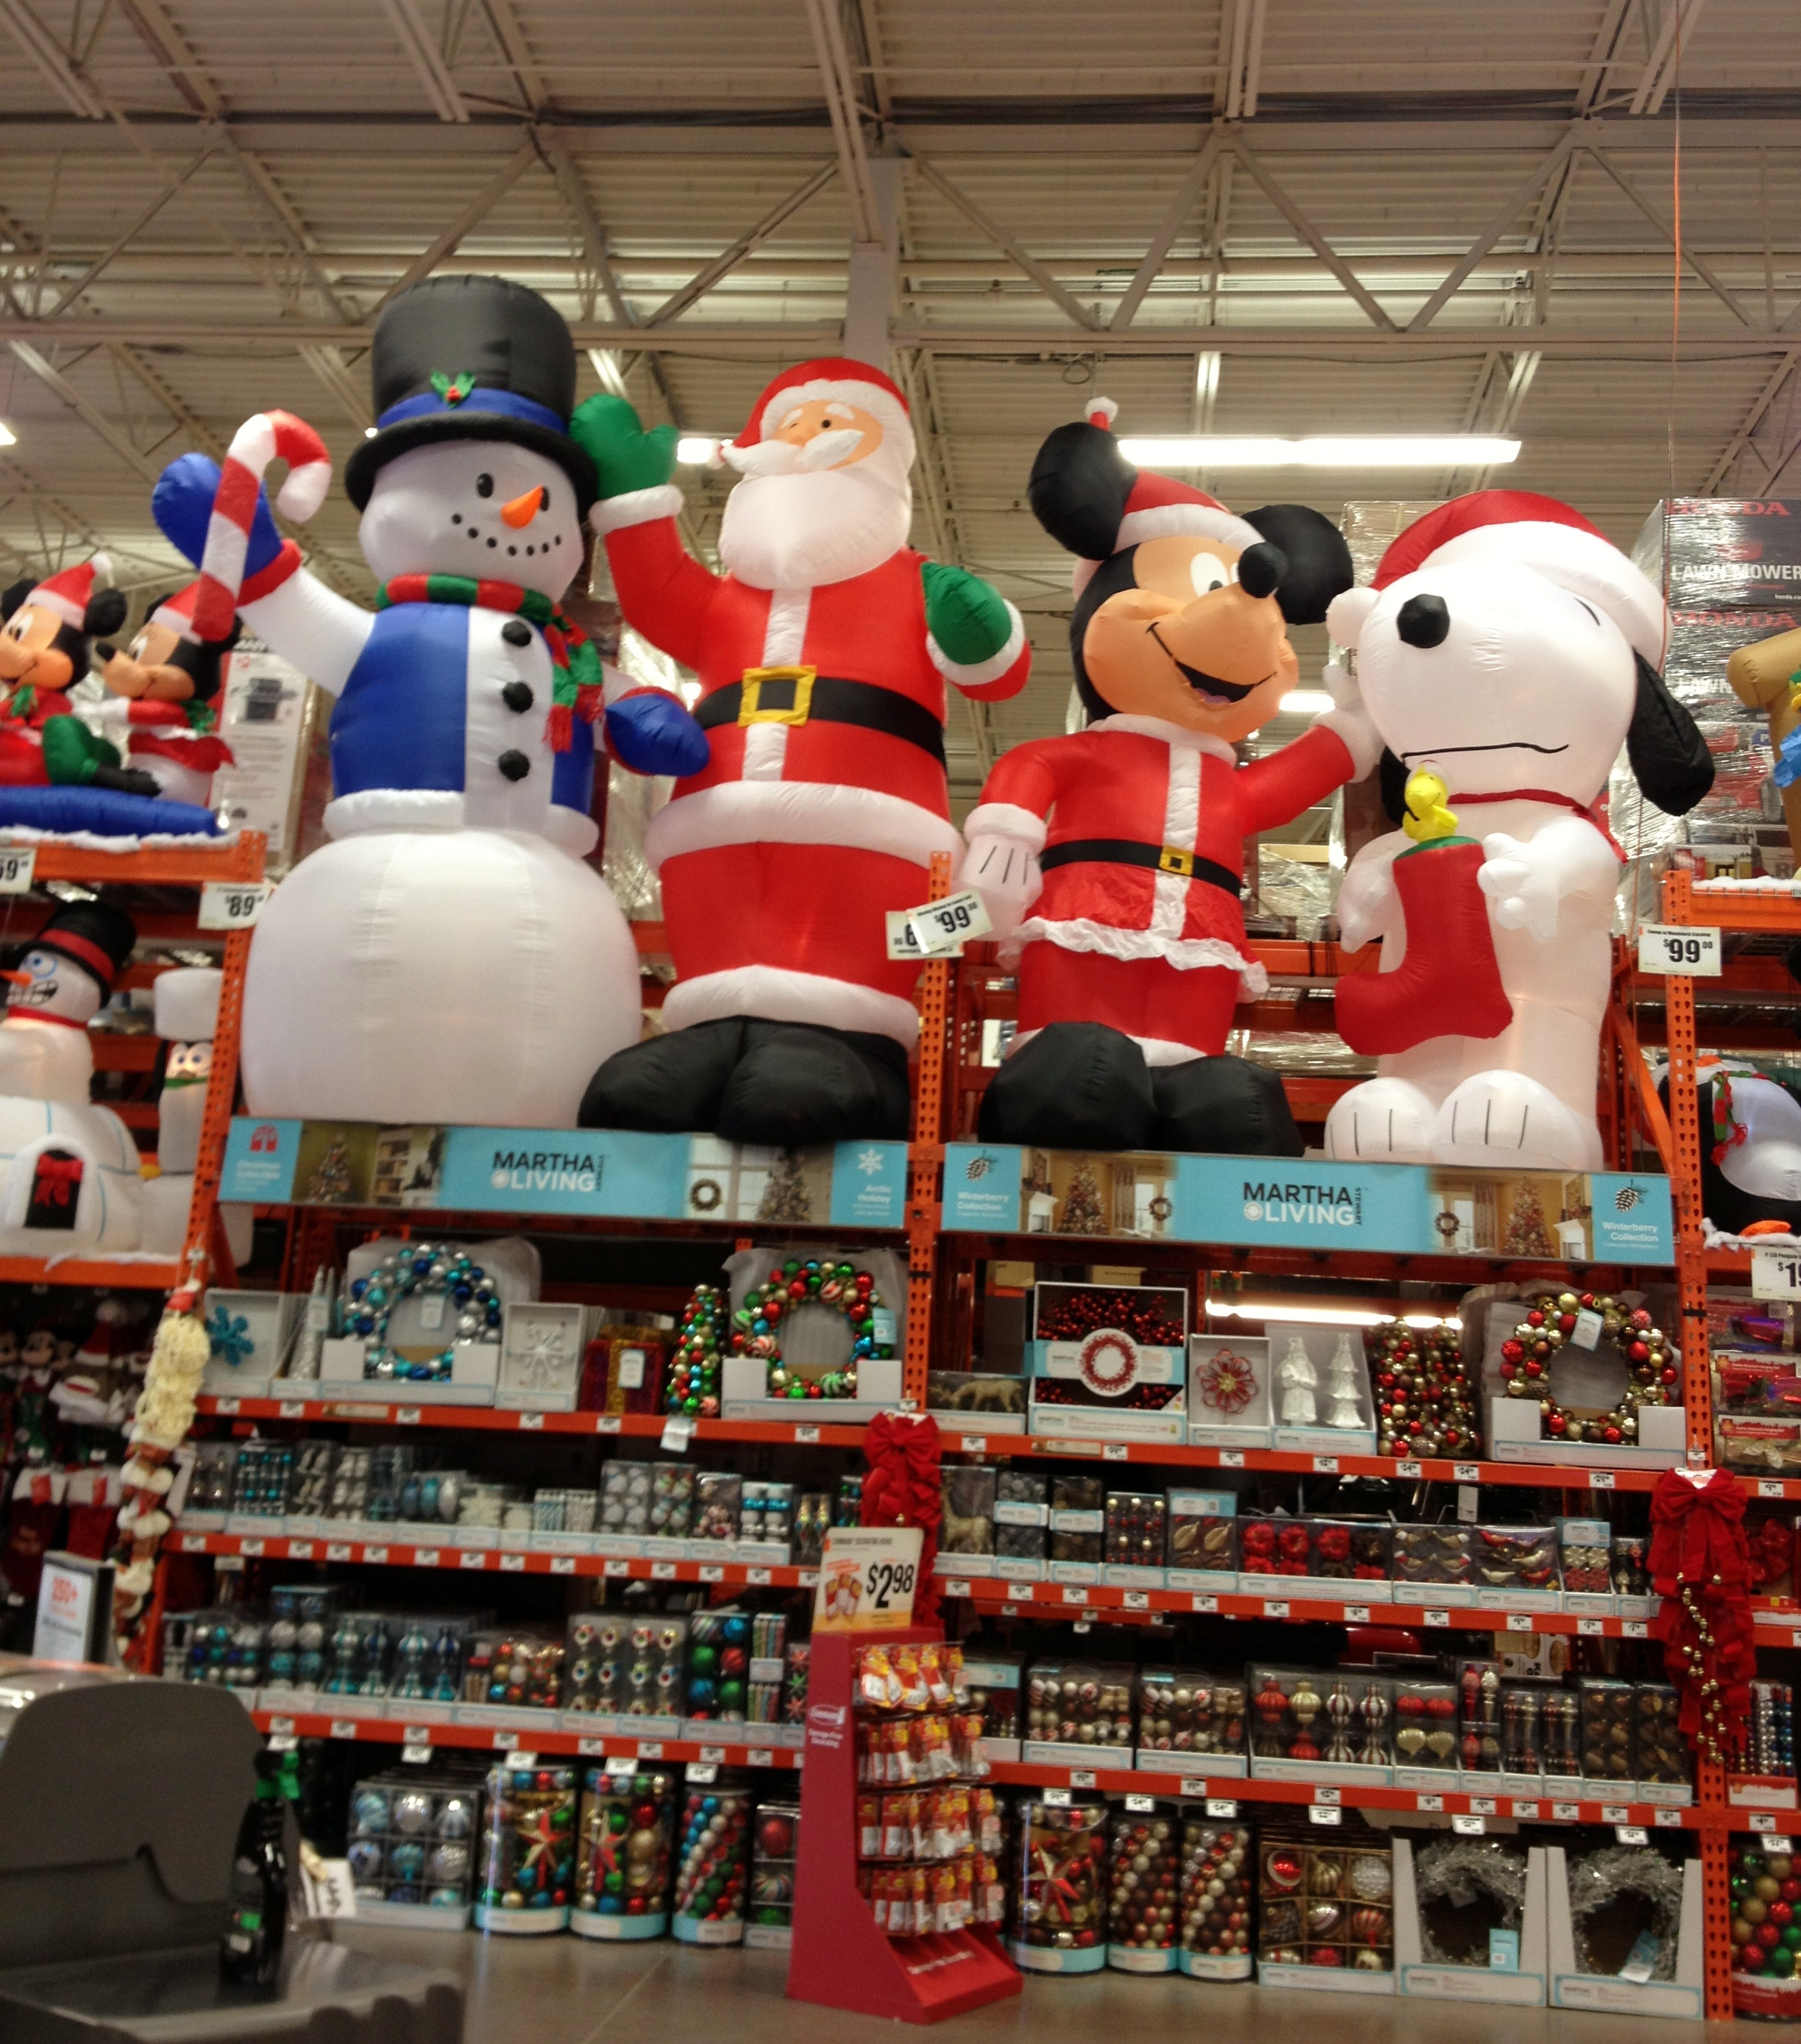 Home Depot Christmas Lights Outdoor
 Dallas Cowboys’ Uniforms Christmas Lights and Applesauce